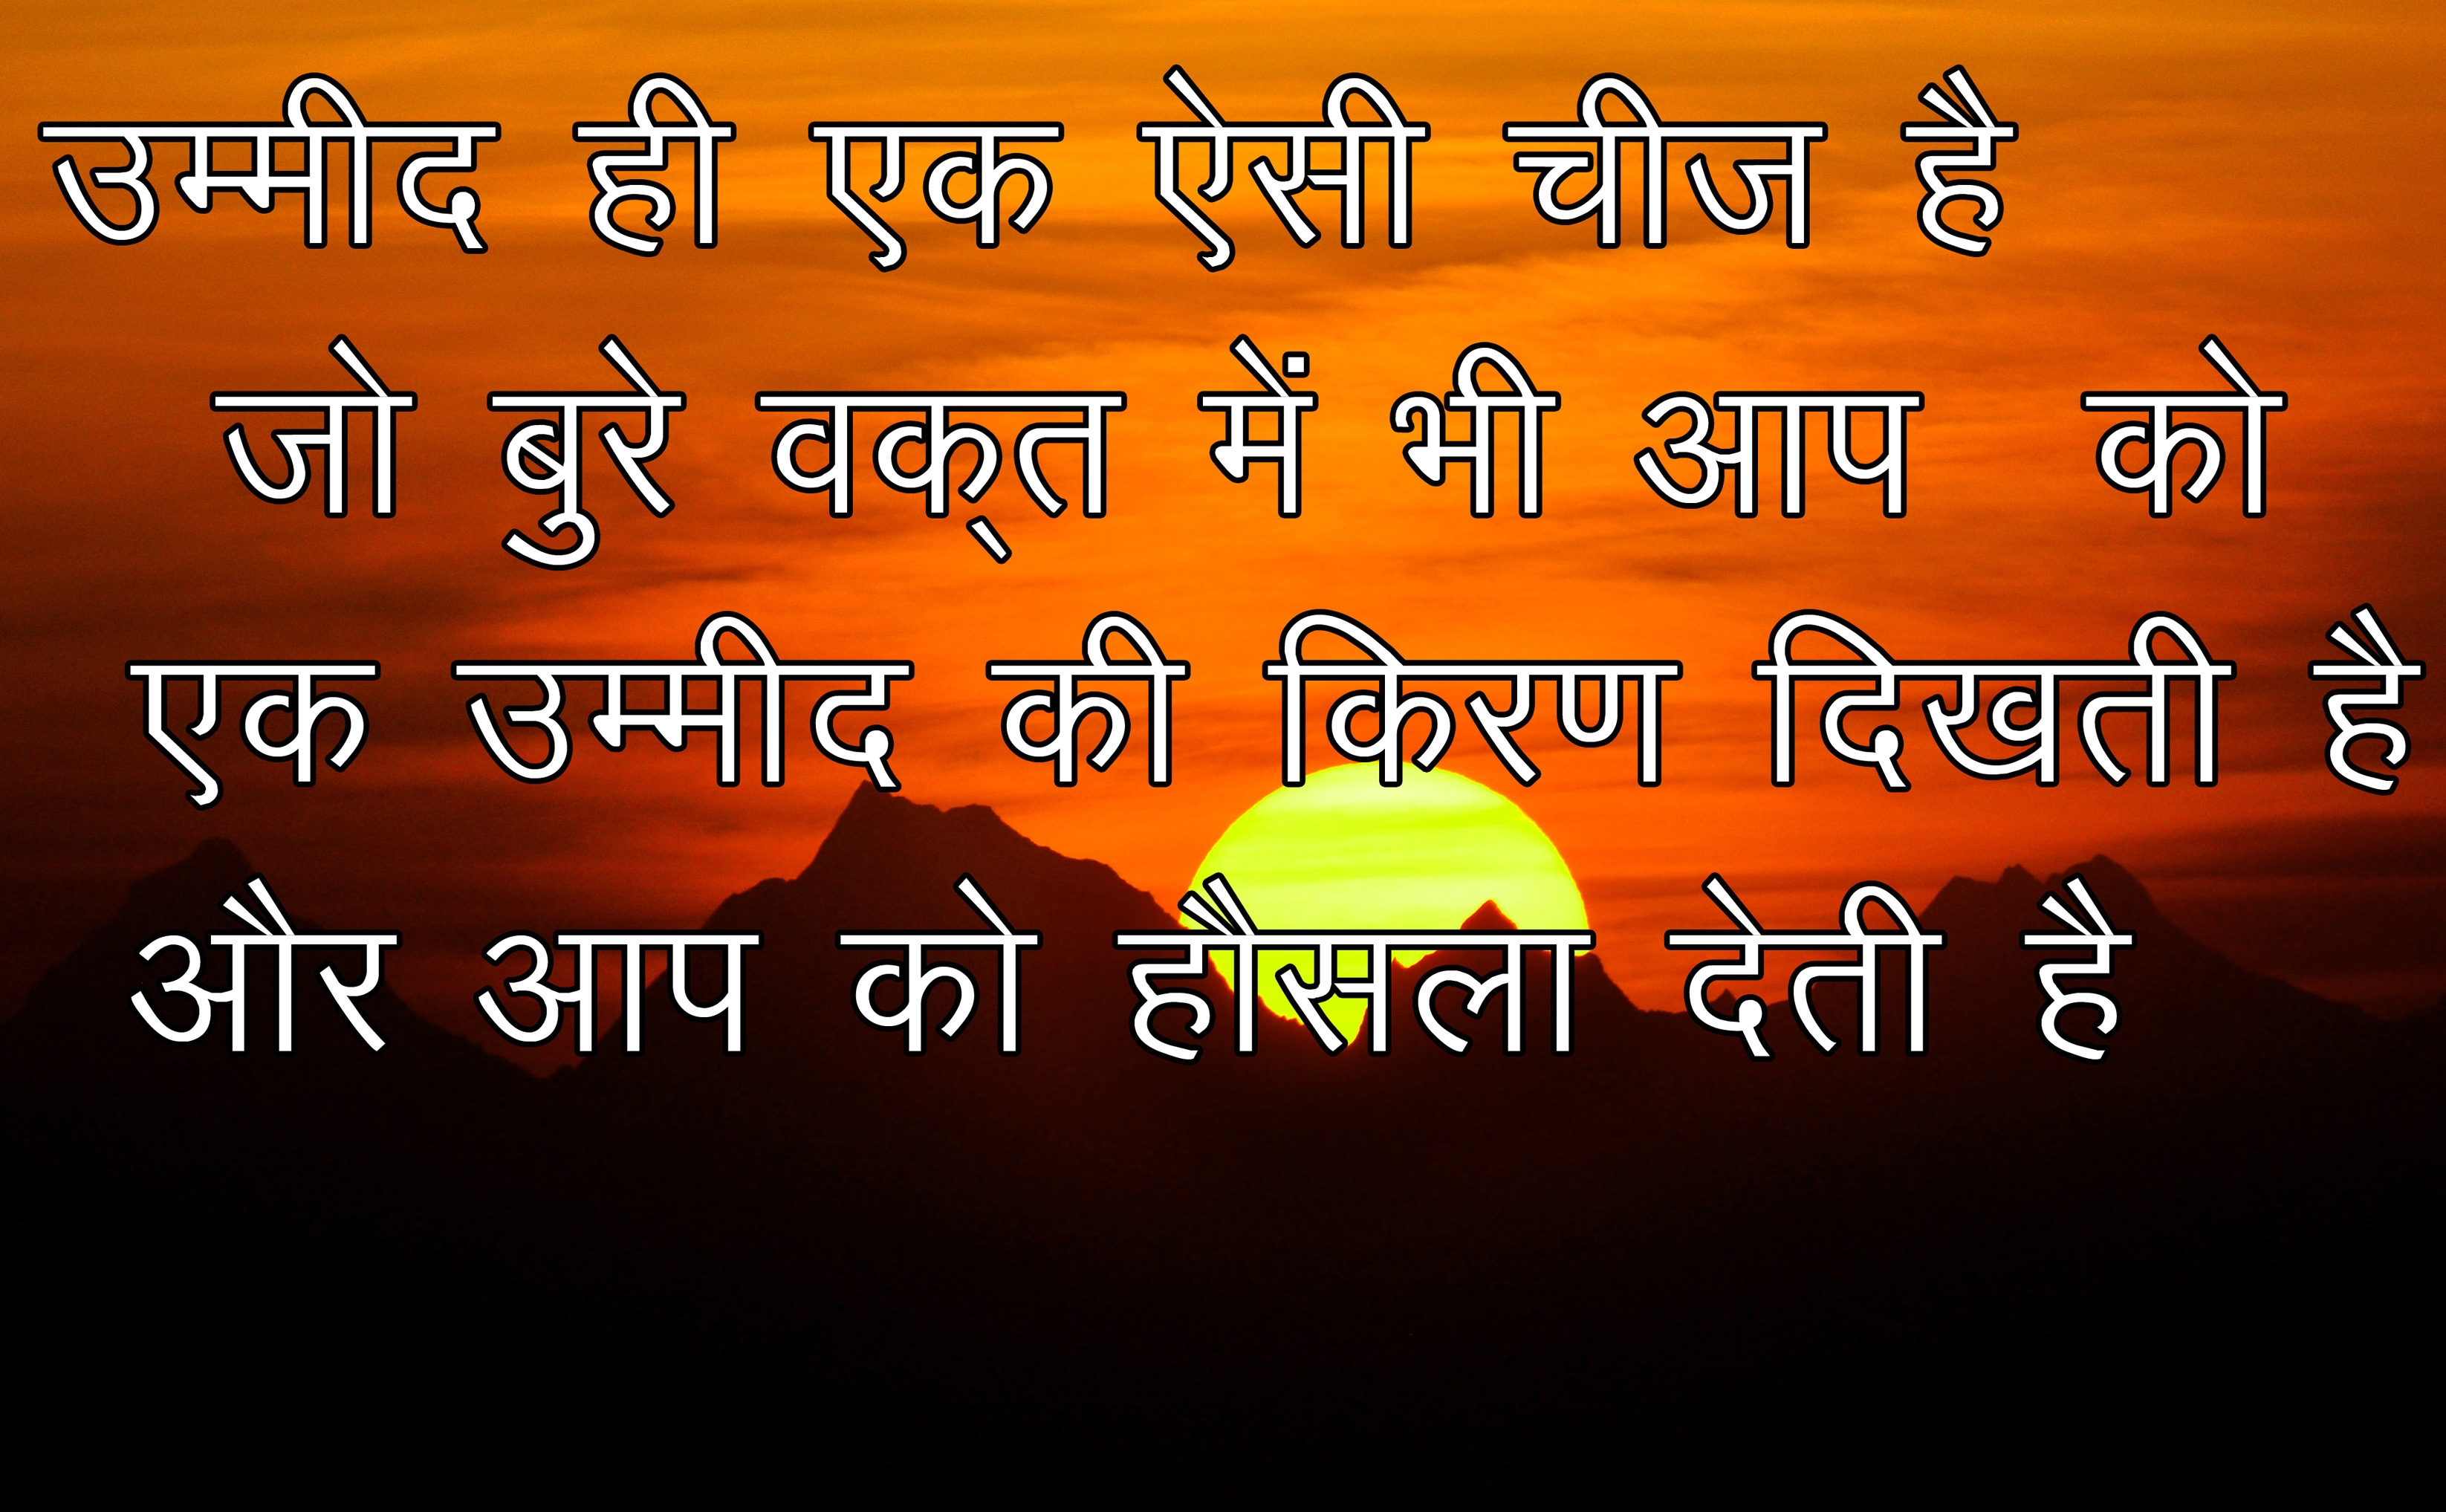 Hindi Status Images Pics Free Download